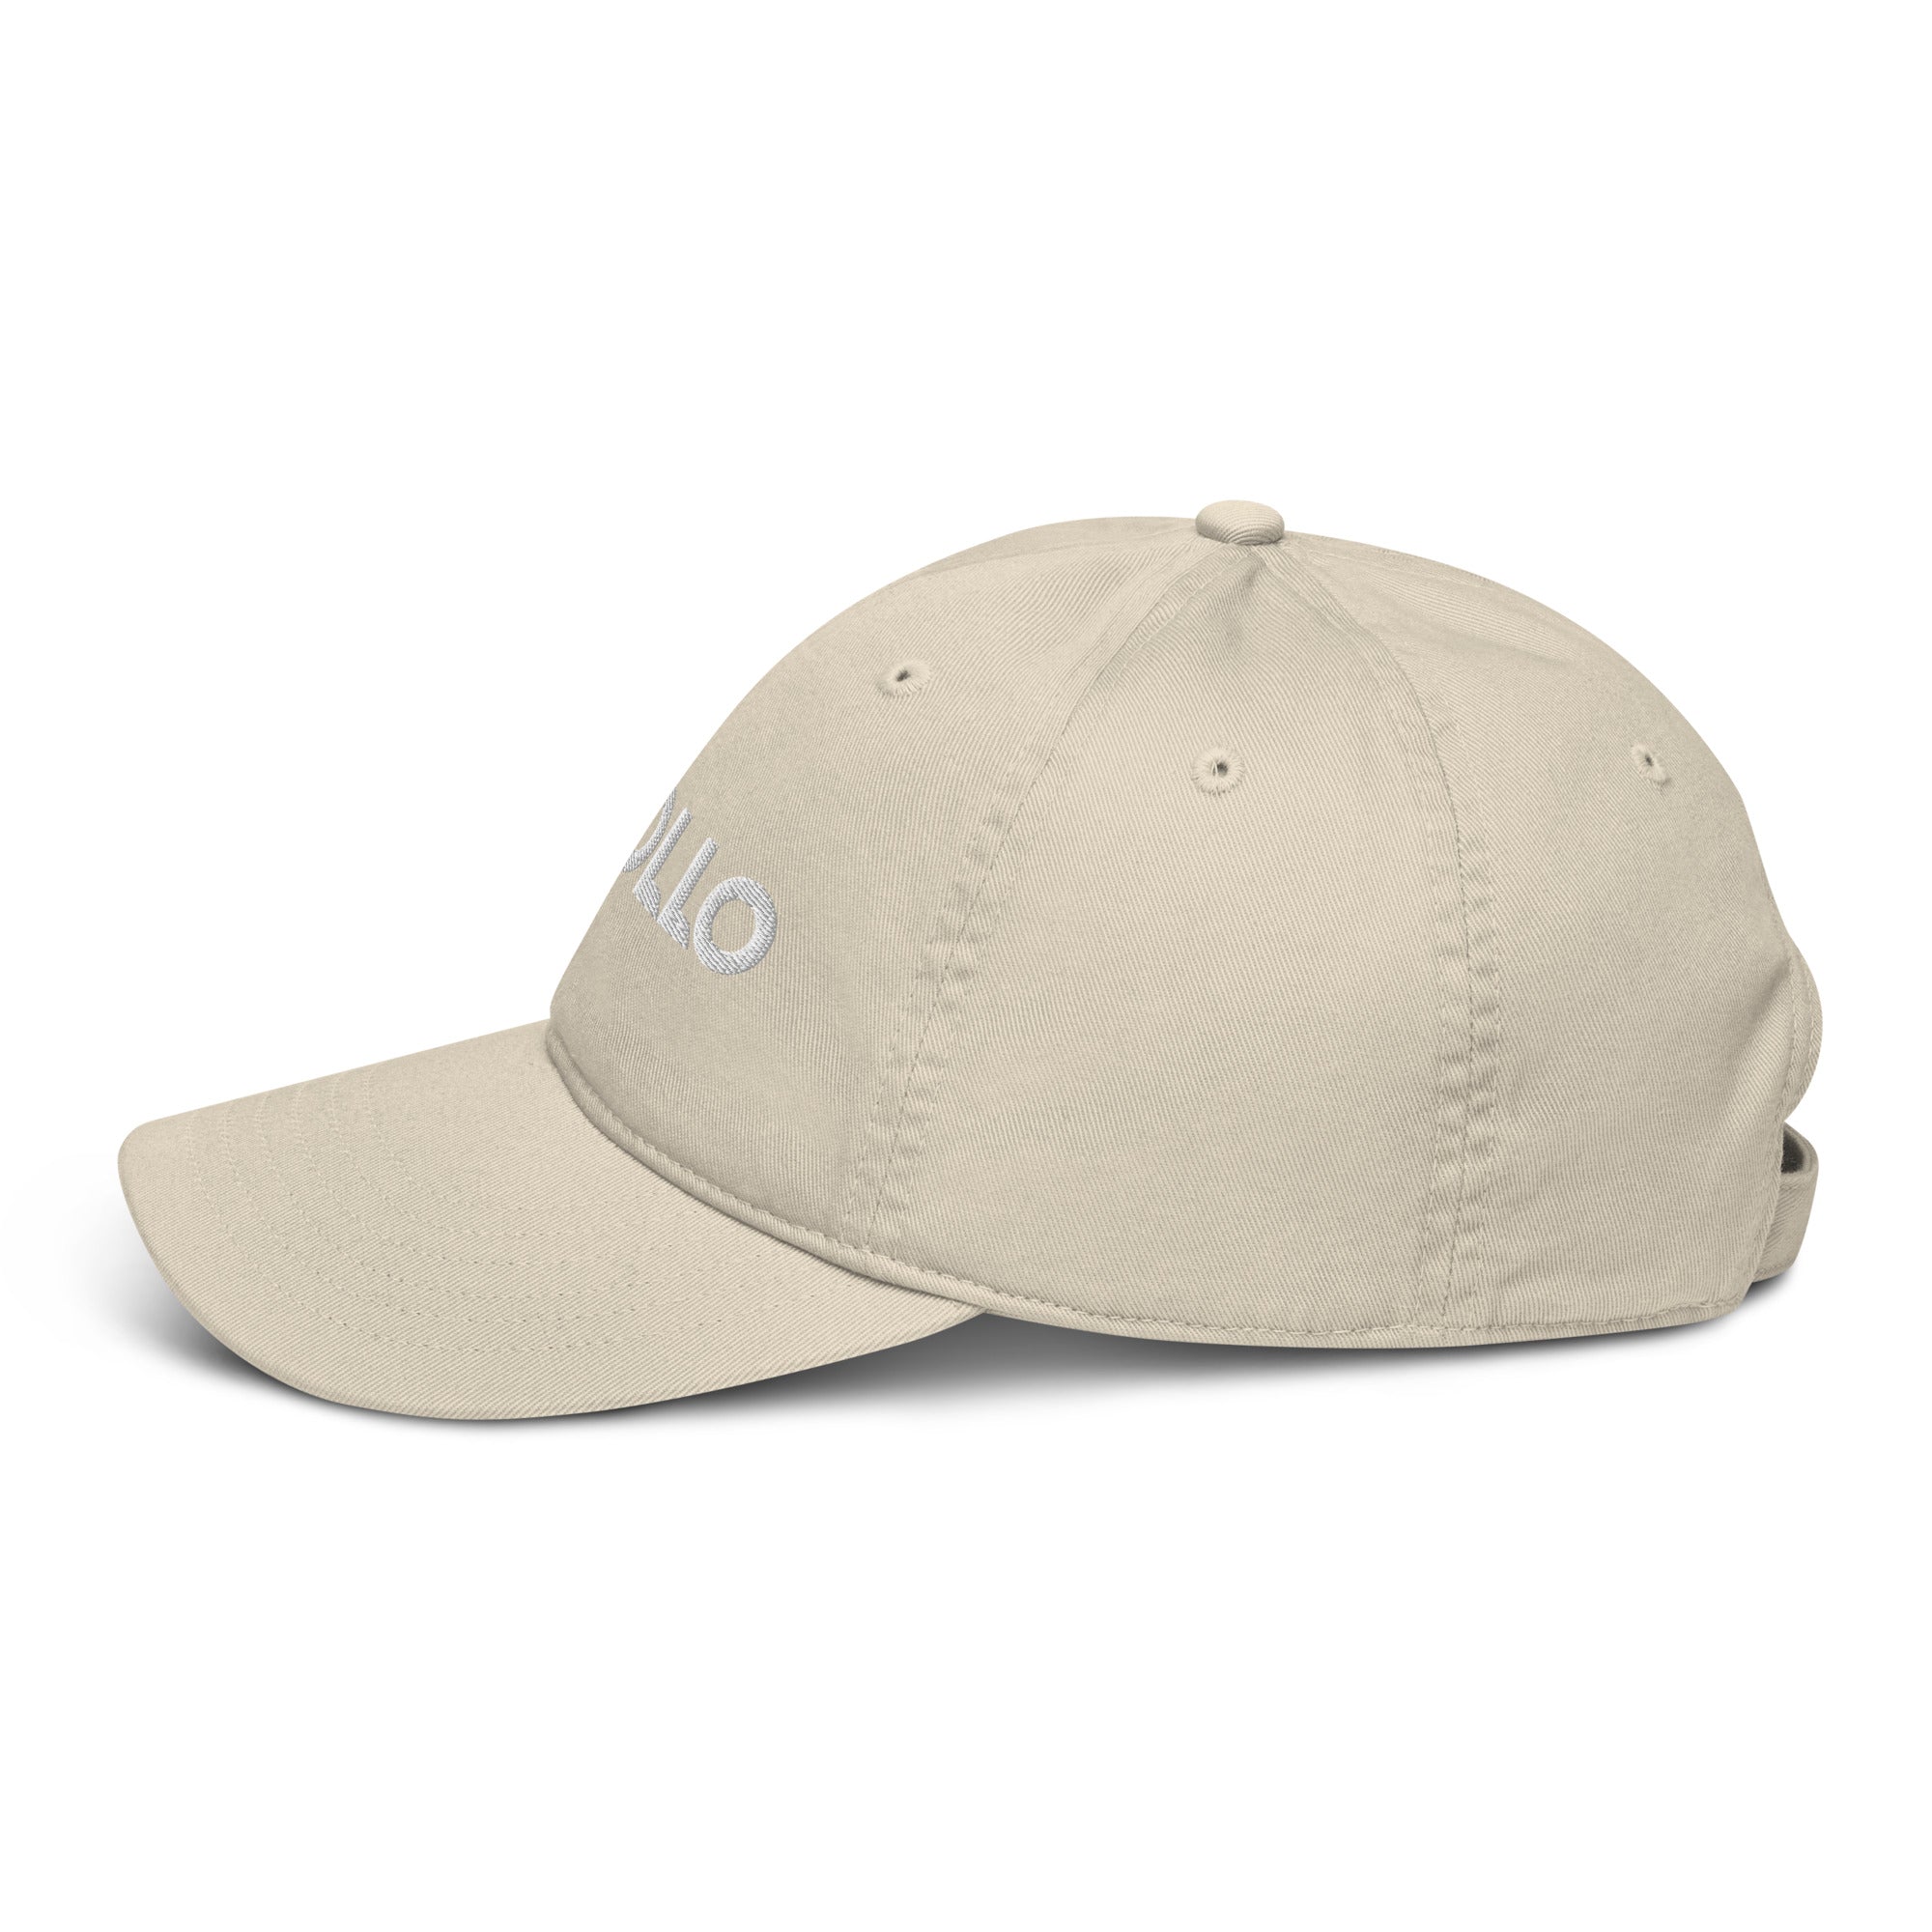 Apollo Organic Cotton Dad Hat